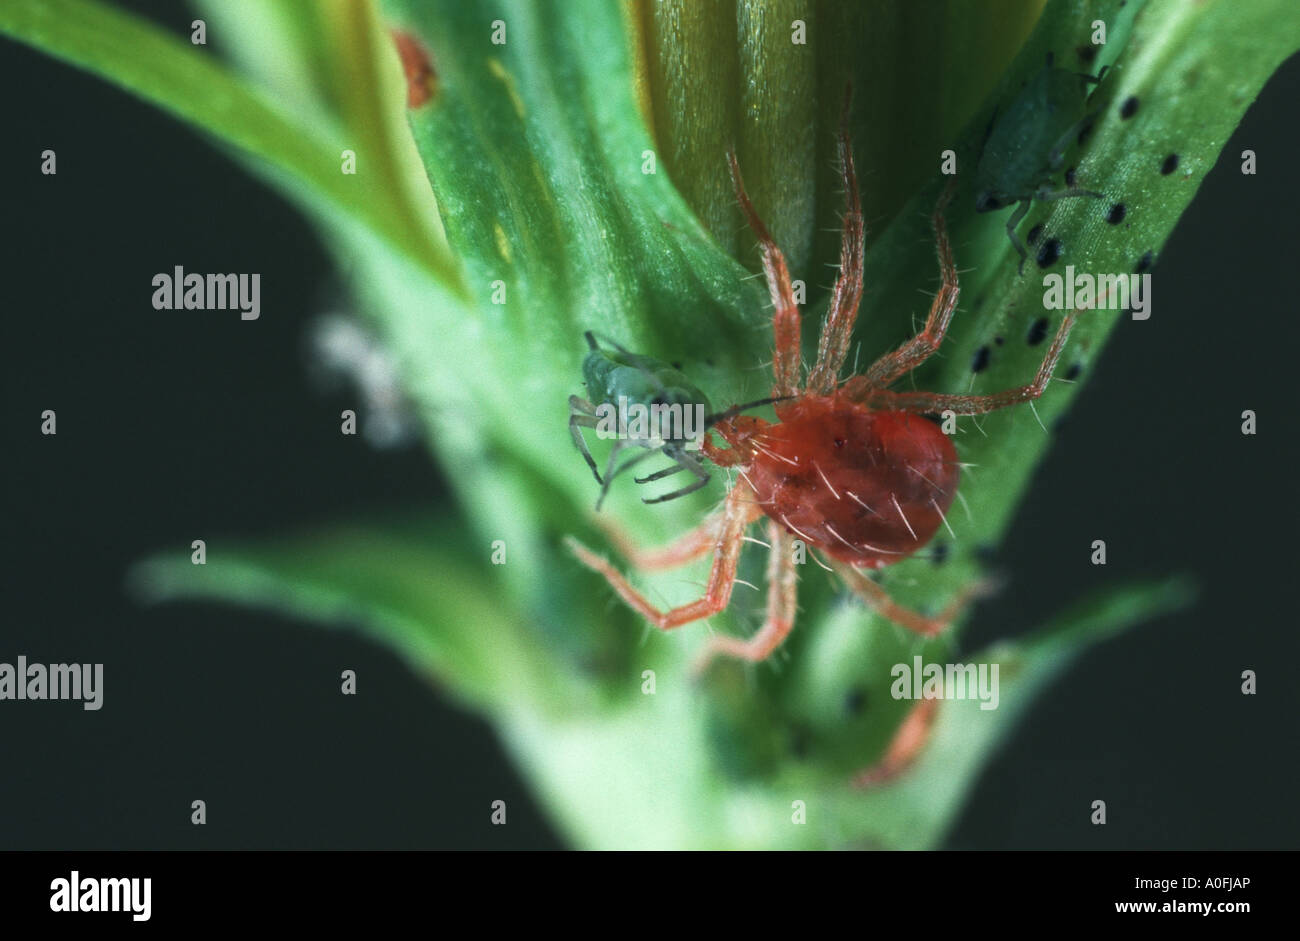 mite (Amystis agilis), captures greenfly Stock Photo